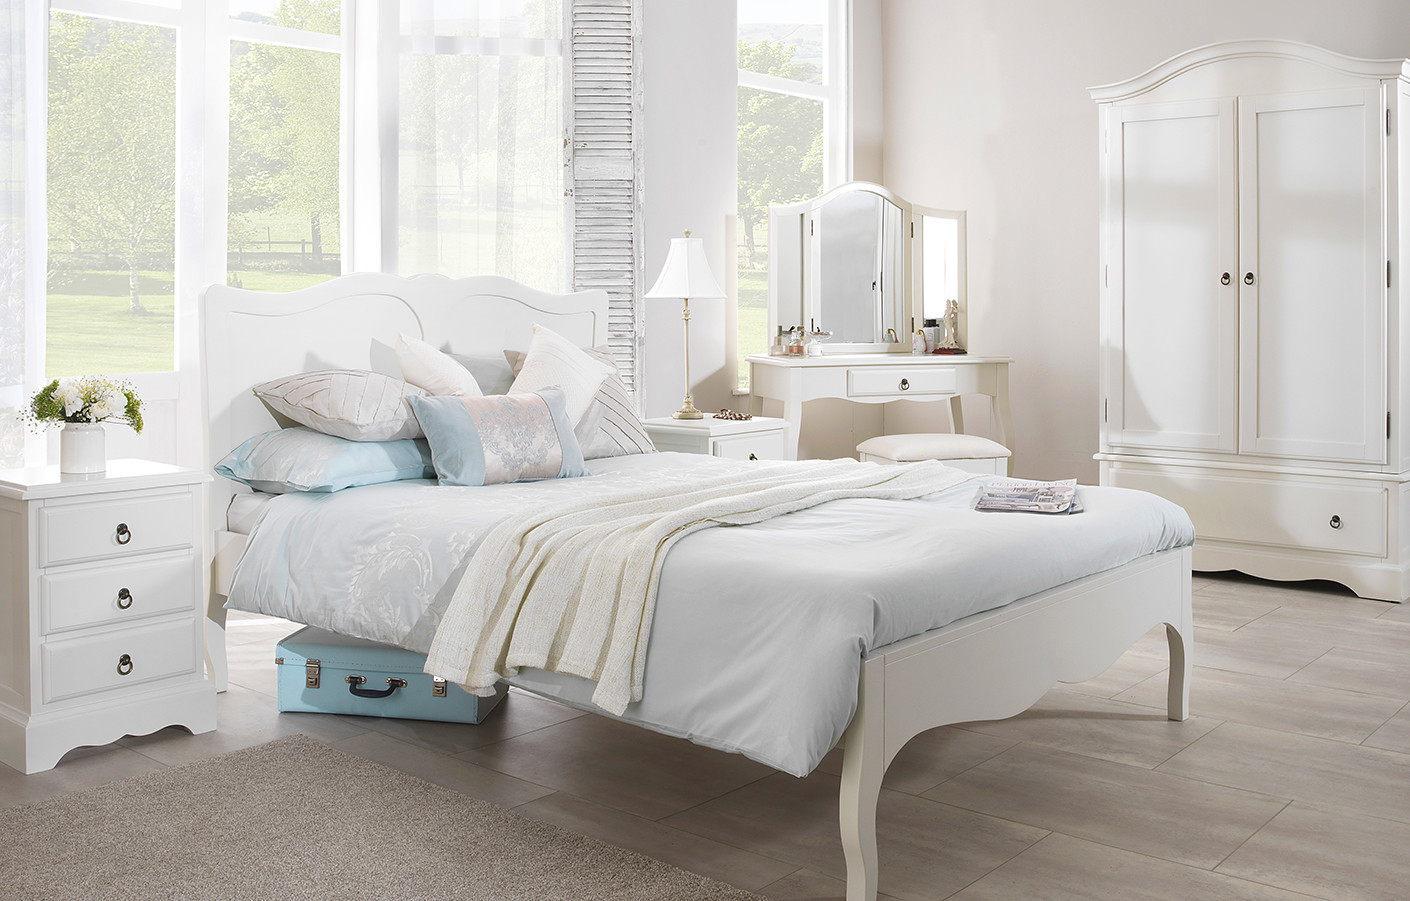 Girls White Bedroom Furniture Set
 TOP 15 Antique white bedroom furniture for girls 2017